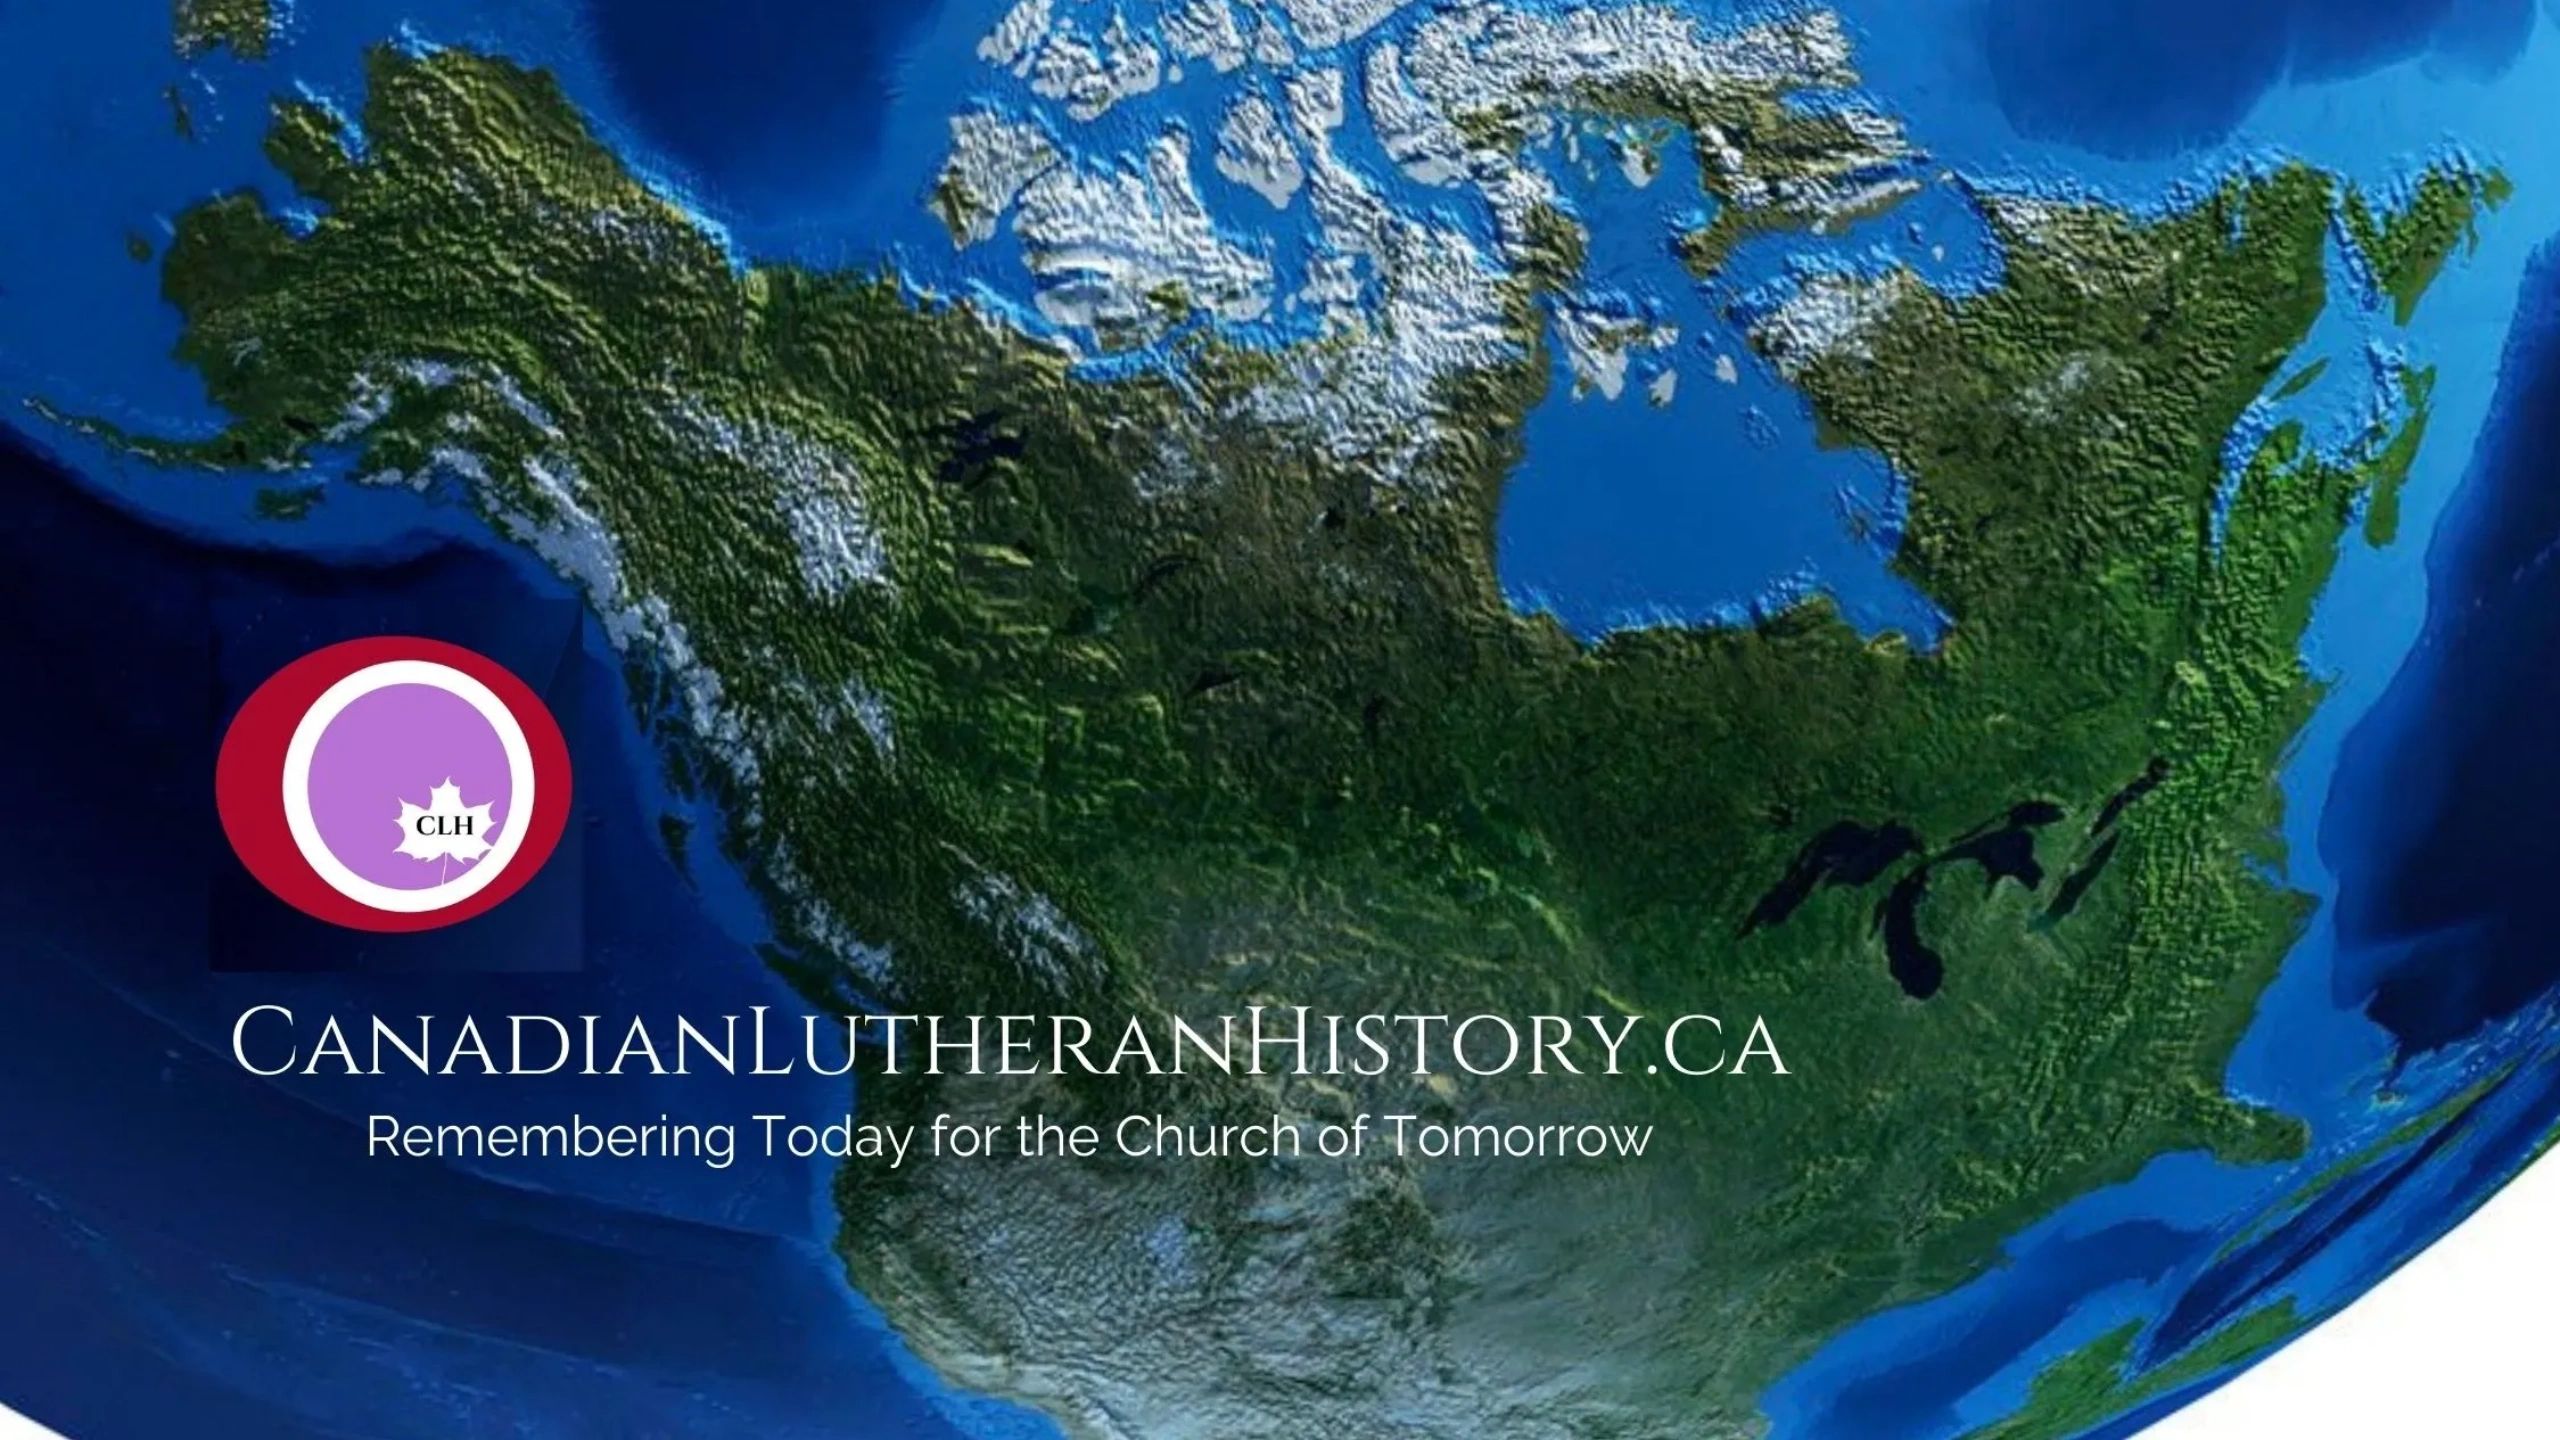 (c) Canadianlutheranhistory.ca